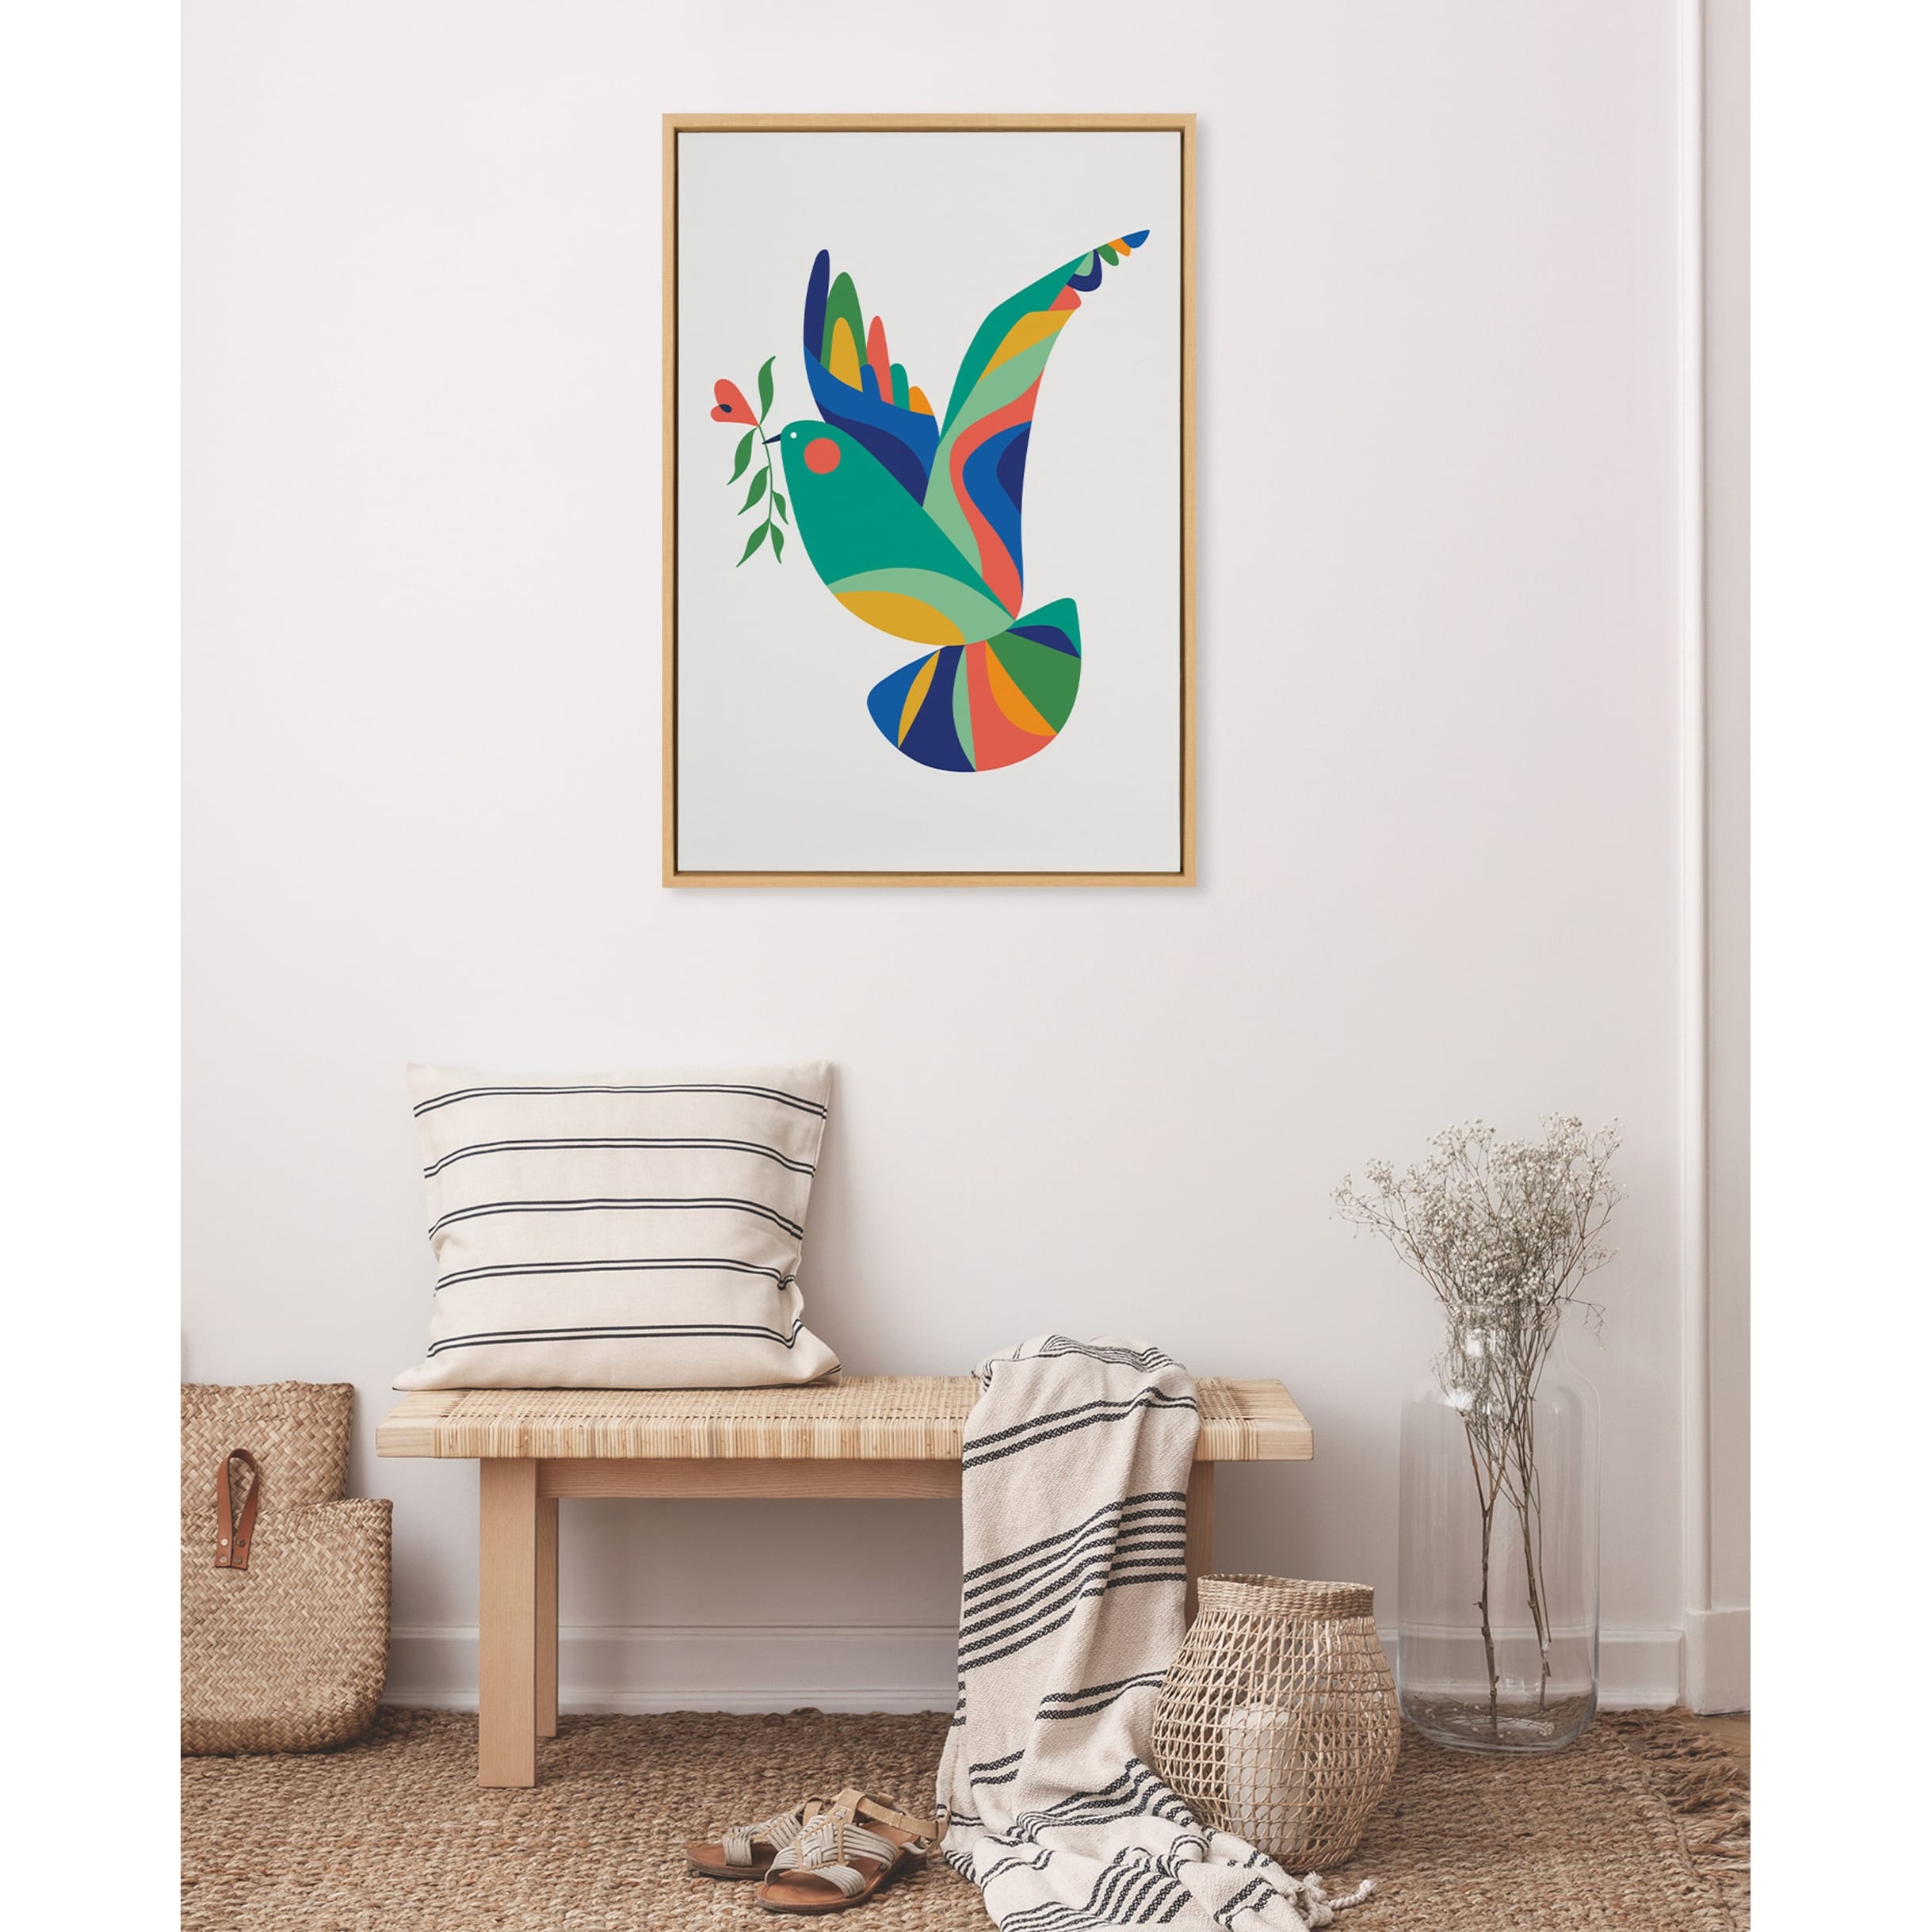 Kate and Laurel Sylvie Bird of Peace Framed Canvas by Rachel Lee Bed Bath   Beyond 37921252